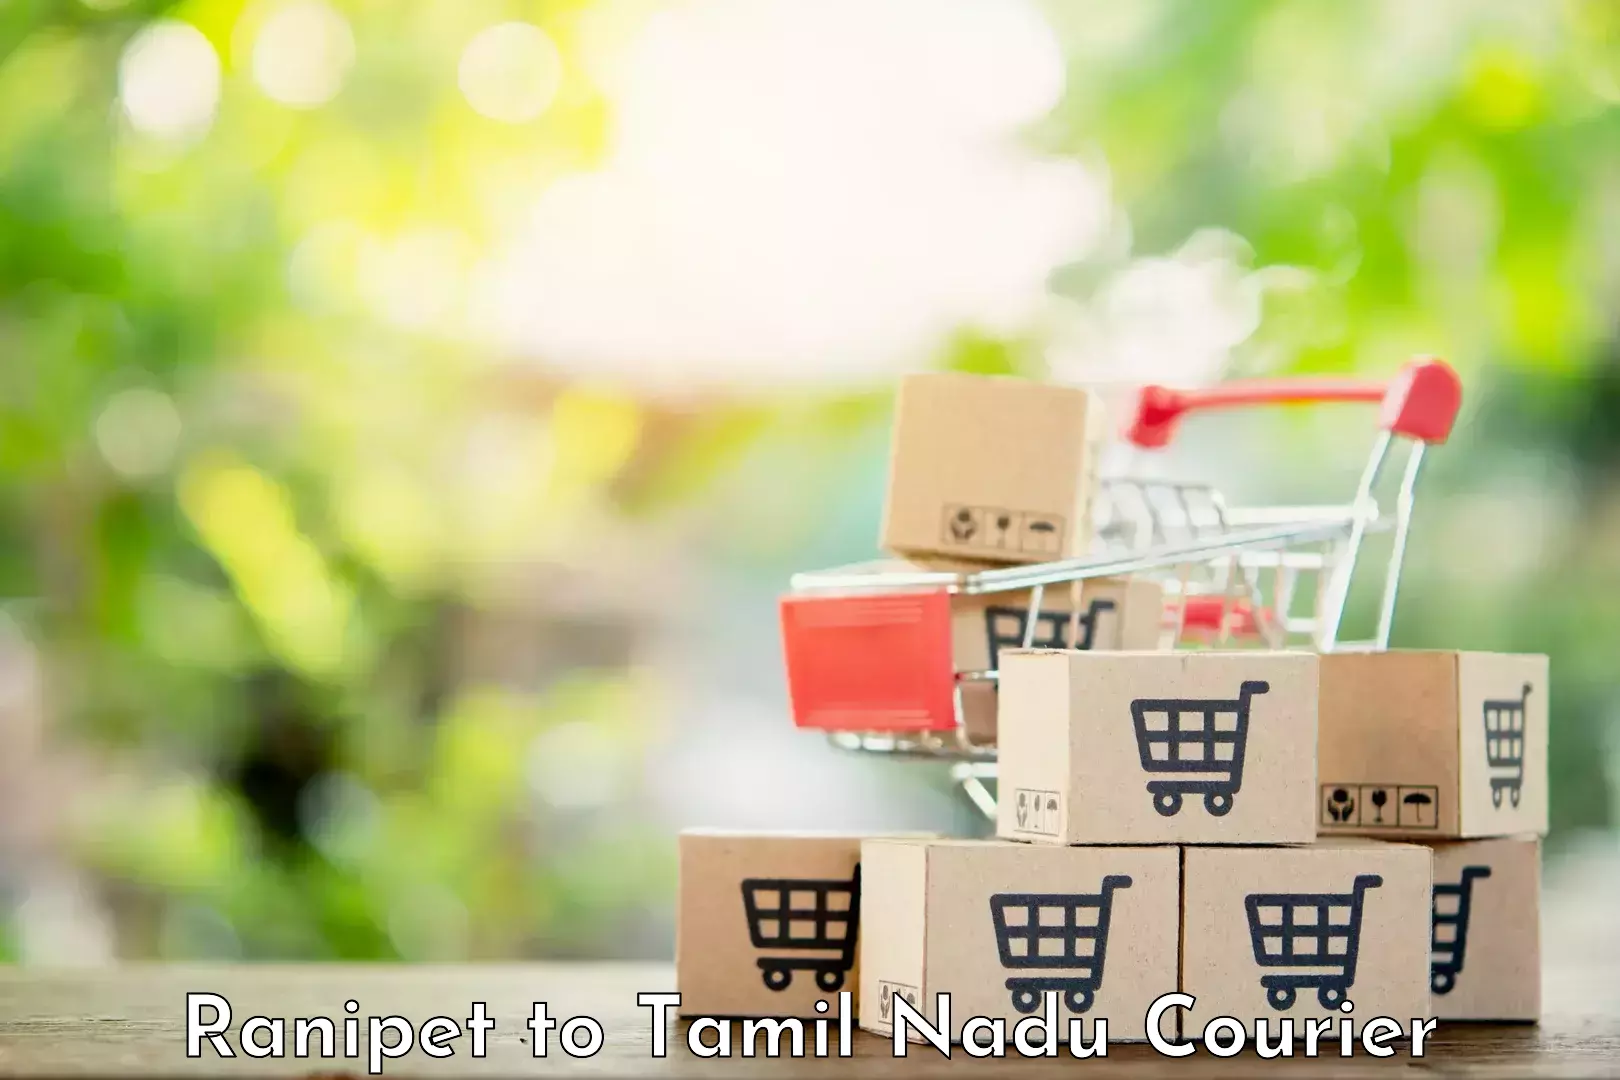 User-friendly courier app Ranipet to Tirunelveli